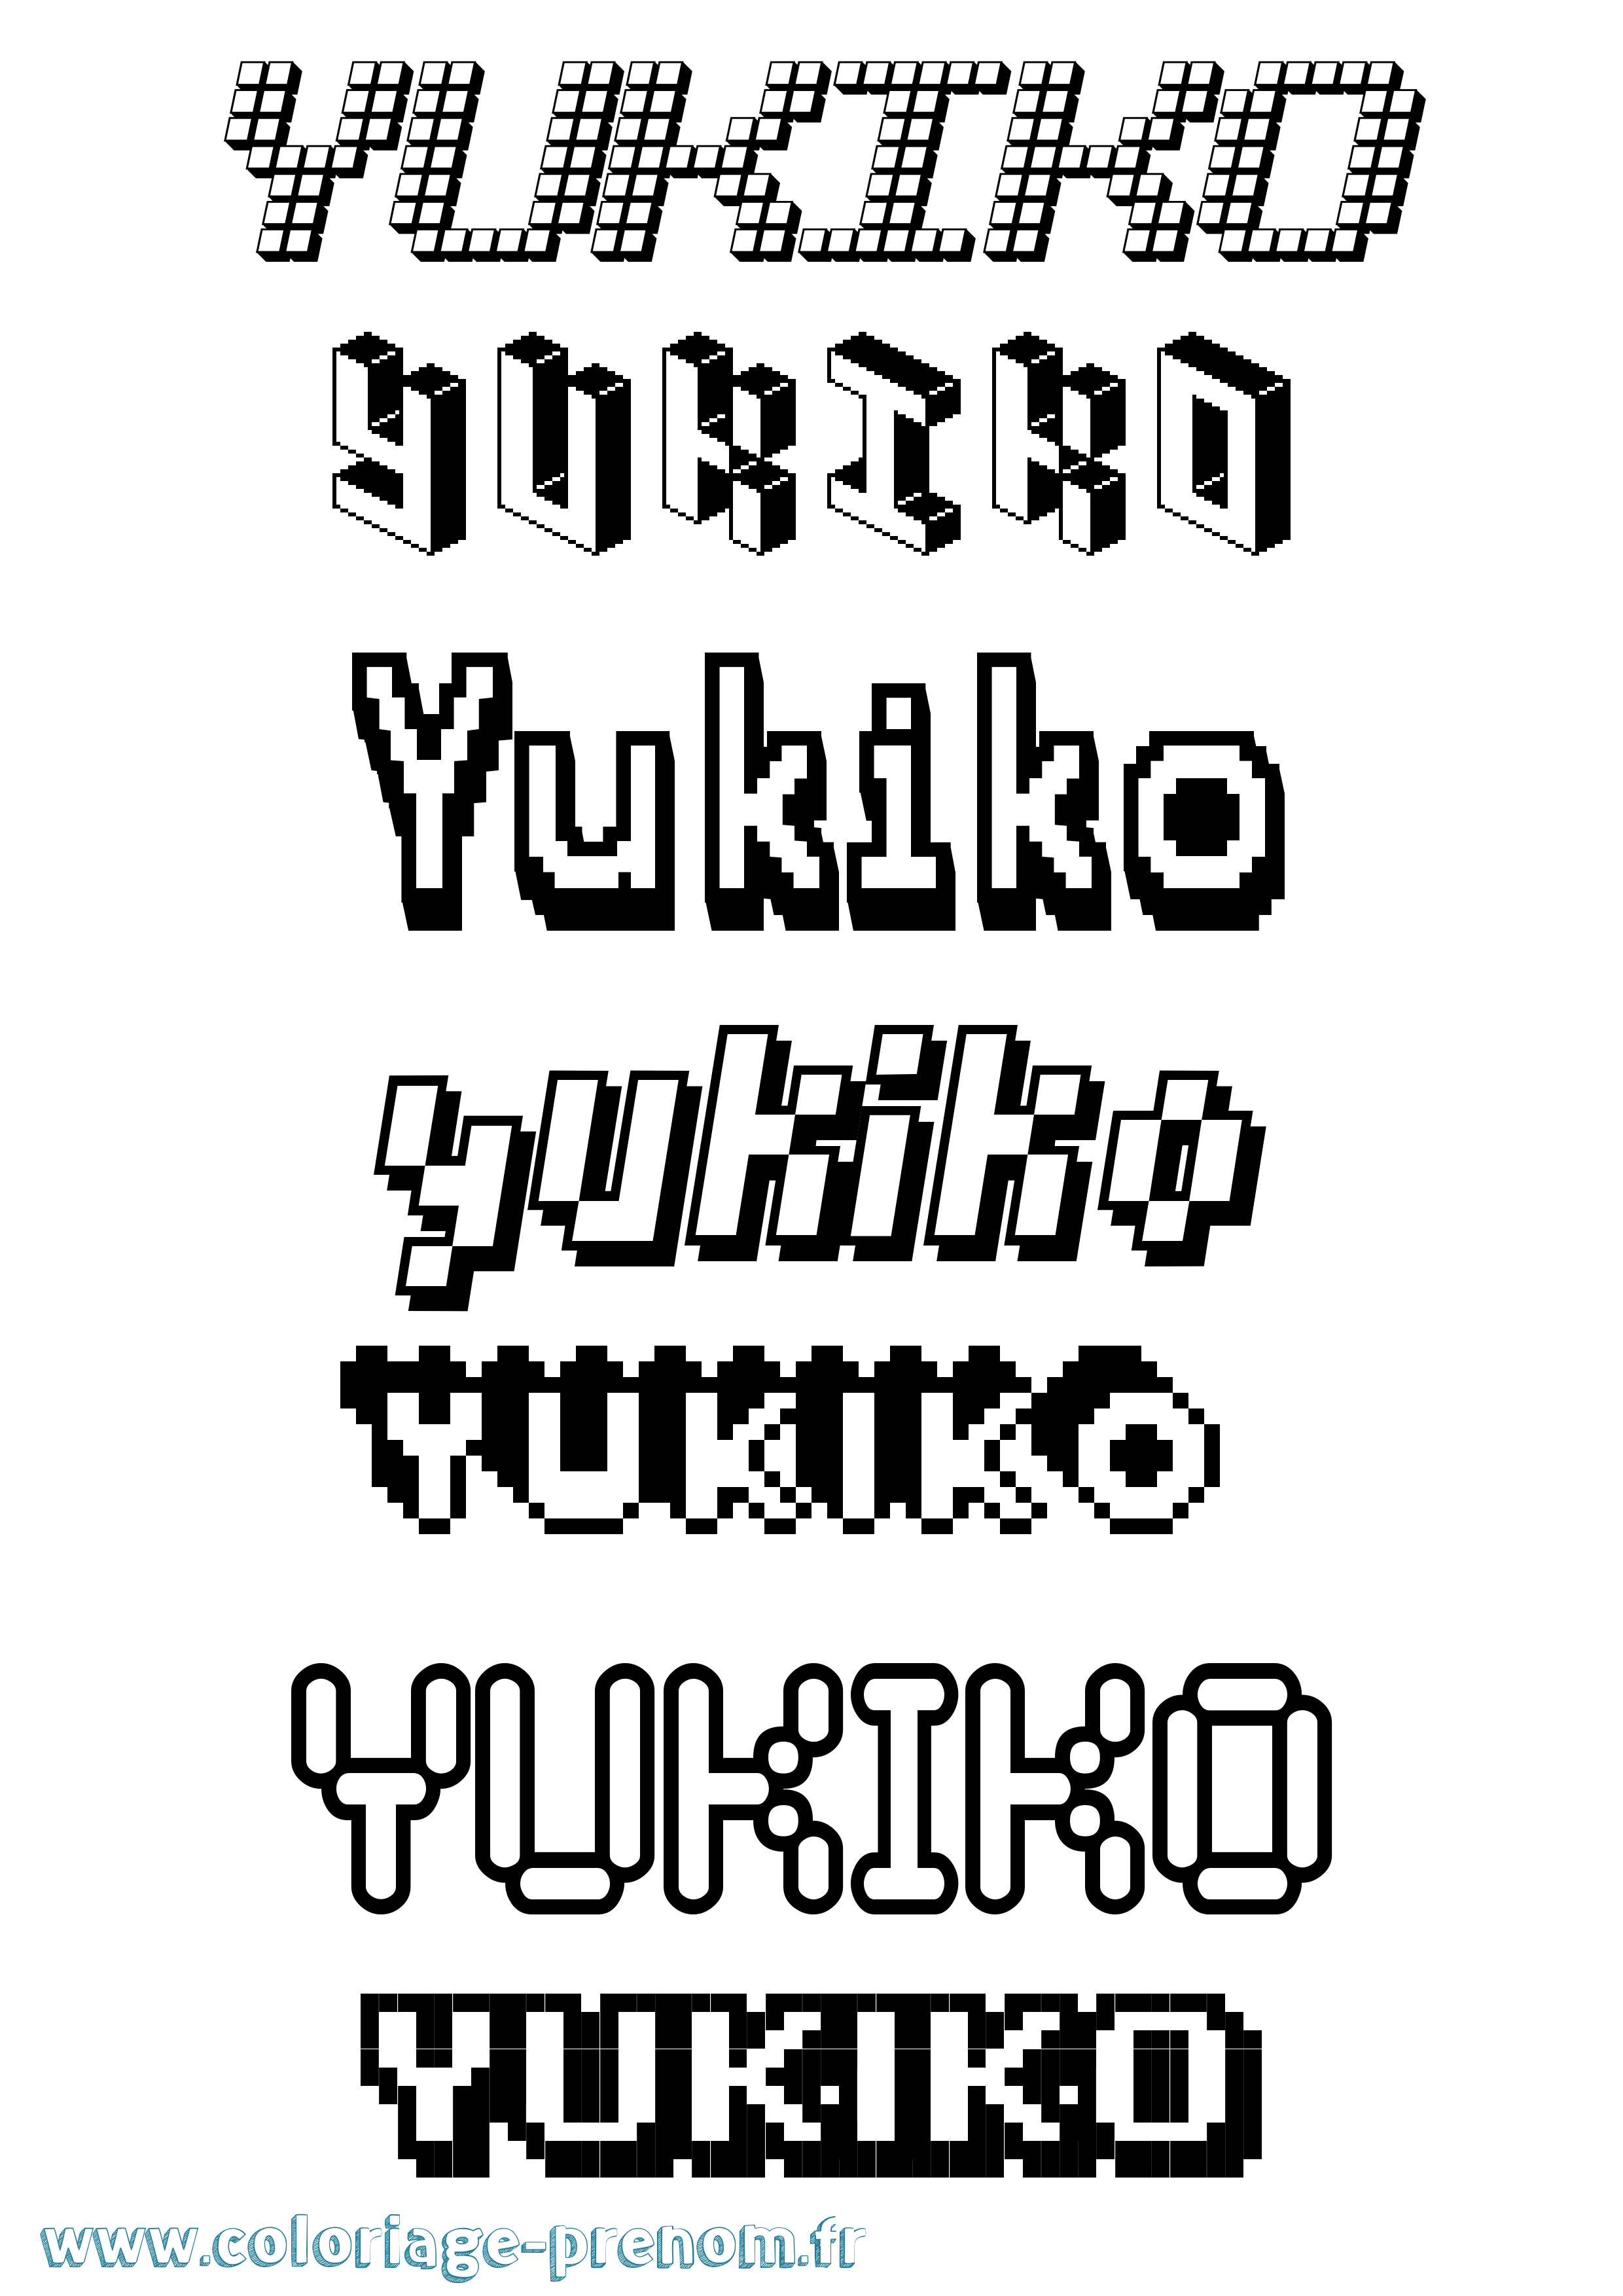 Coloriage prénom Yukiko Pixel